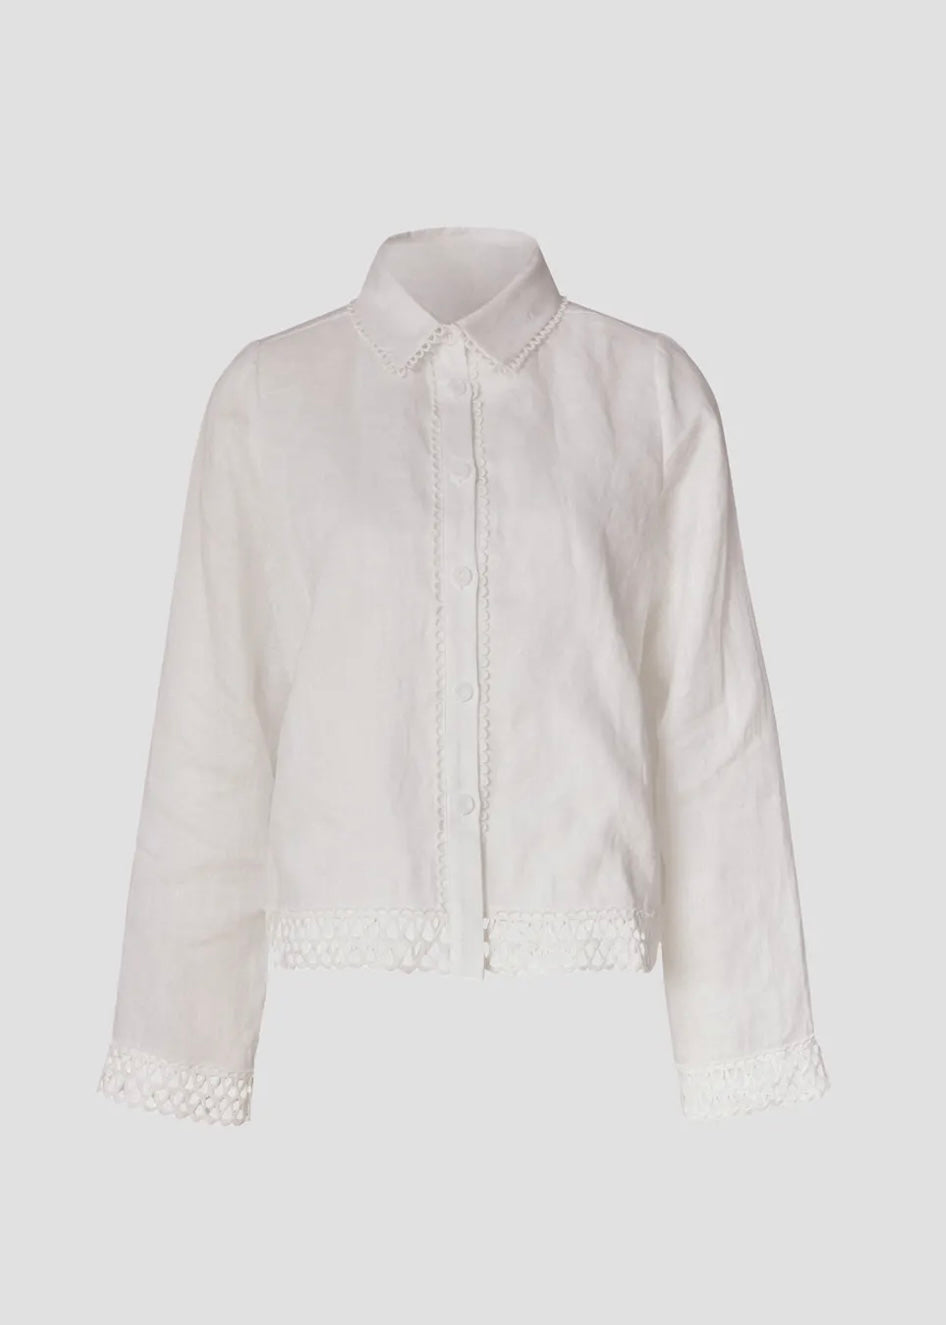 Camilla Pihl Agathia shirt - White